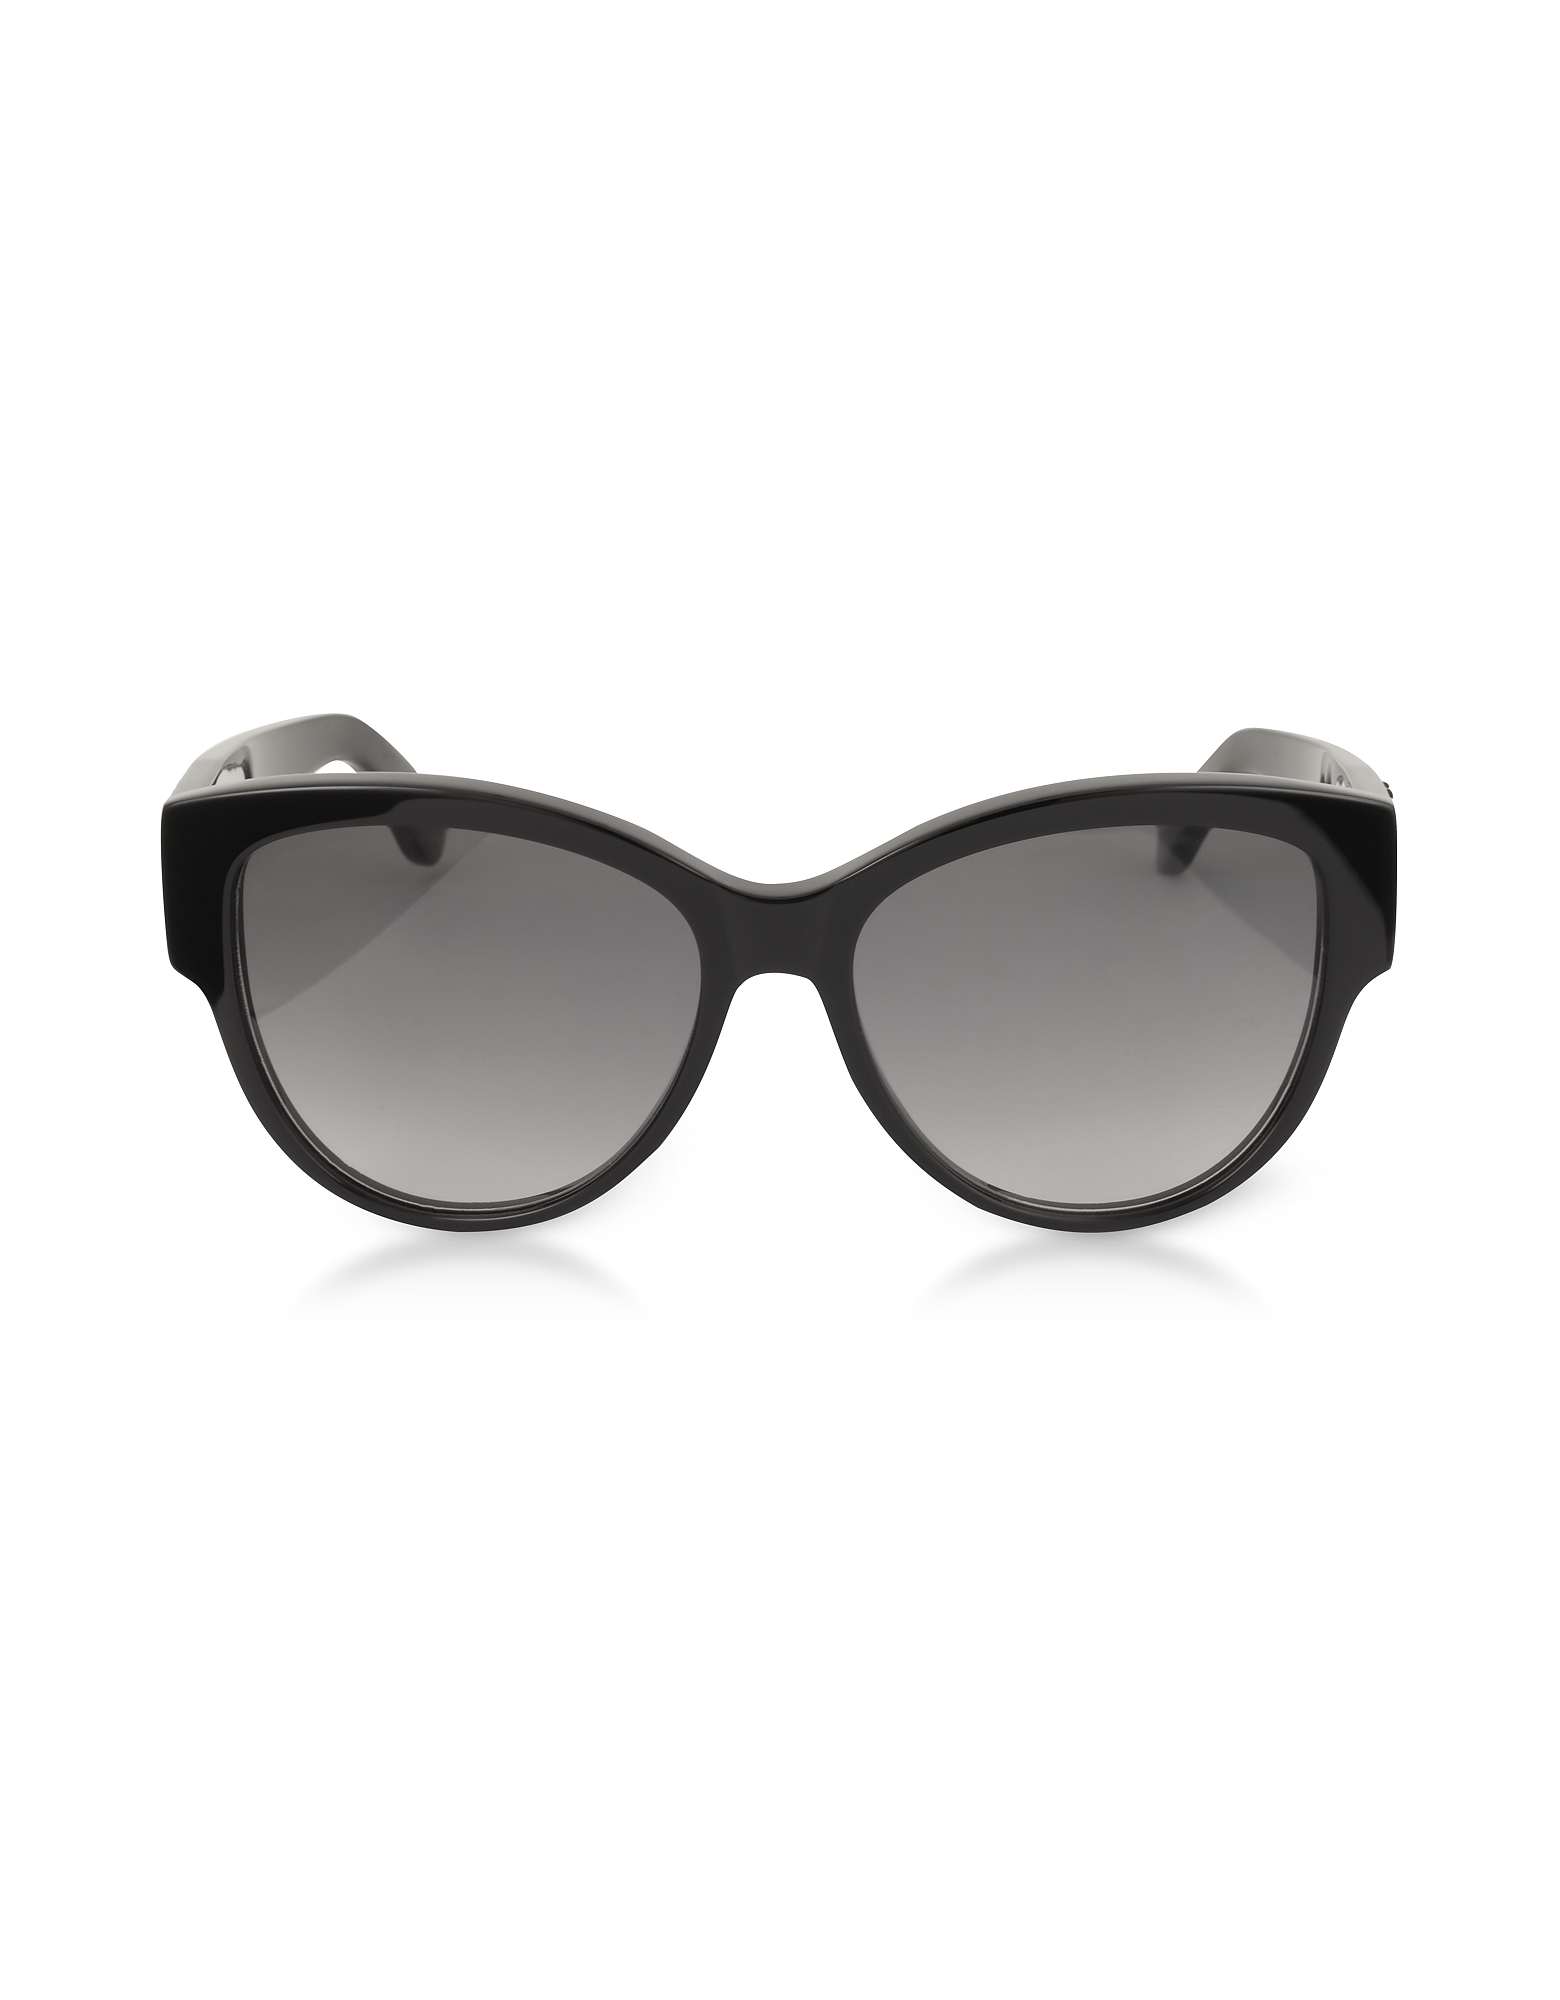 

SL M3 Round Black Acetate Frame Women's Sunglasses, Black/gray